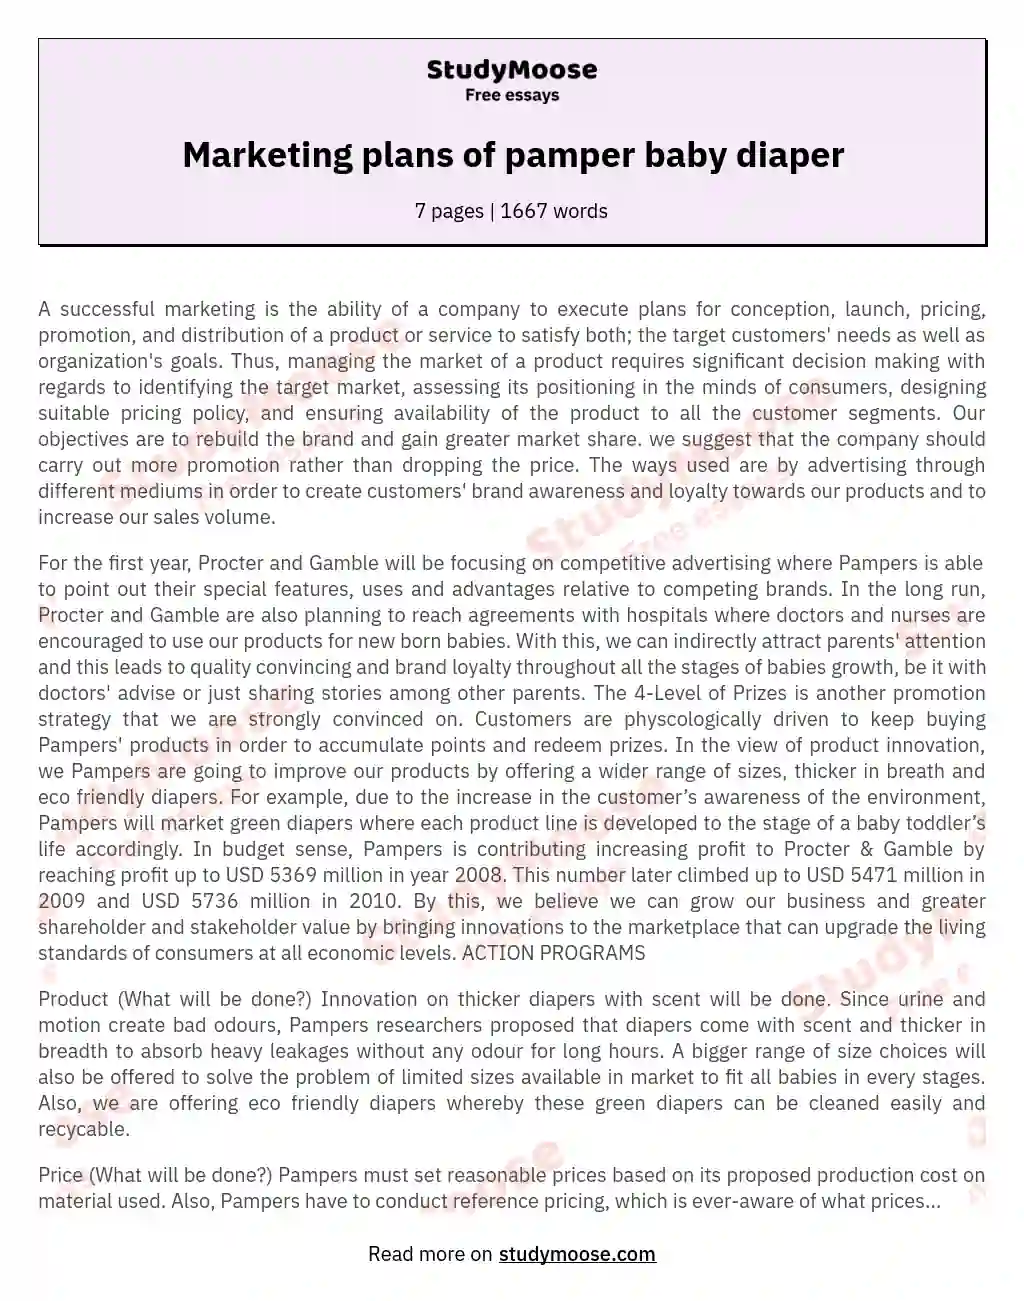 Marketing plans of pamper baby diaper essay